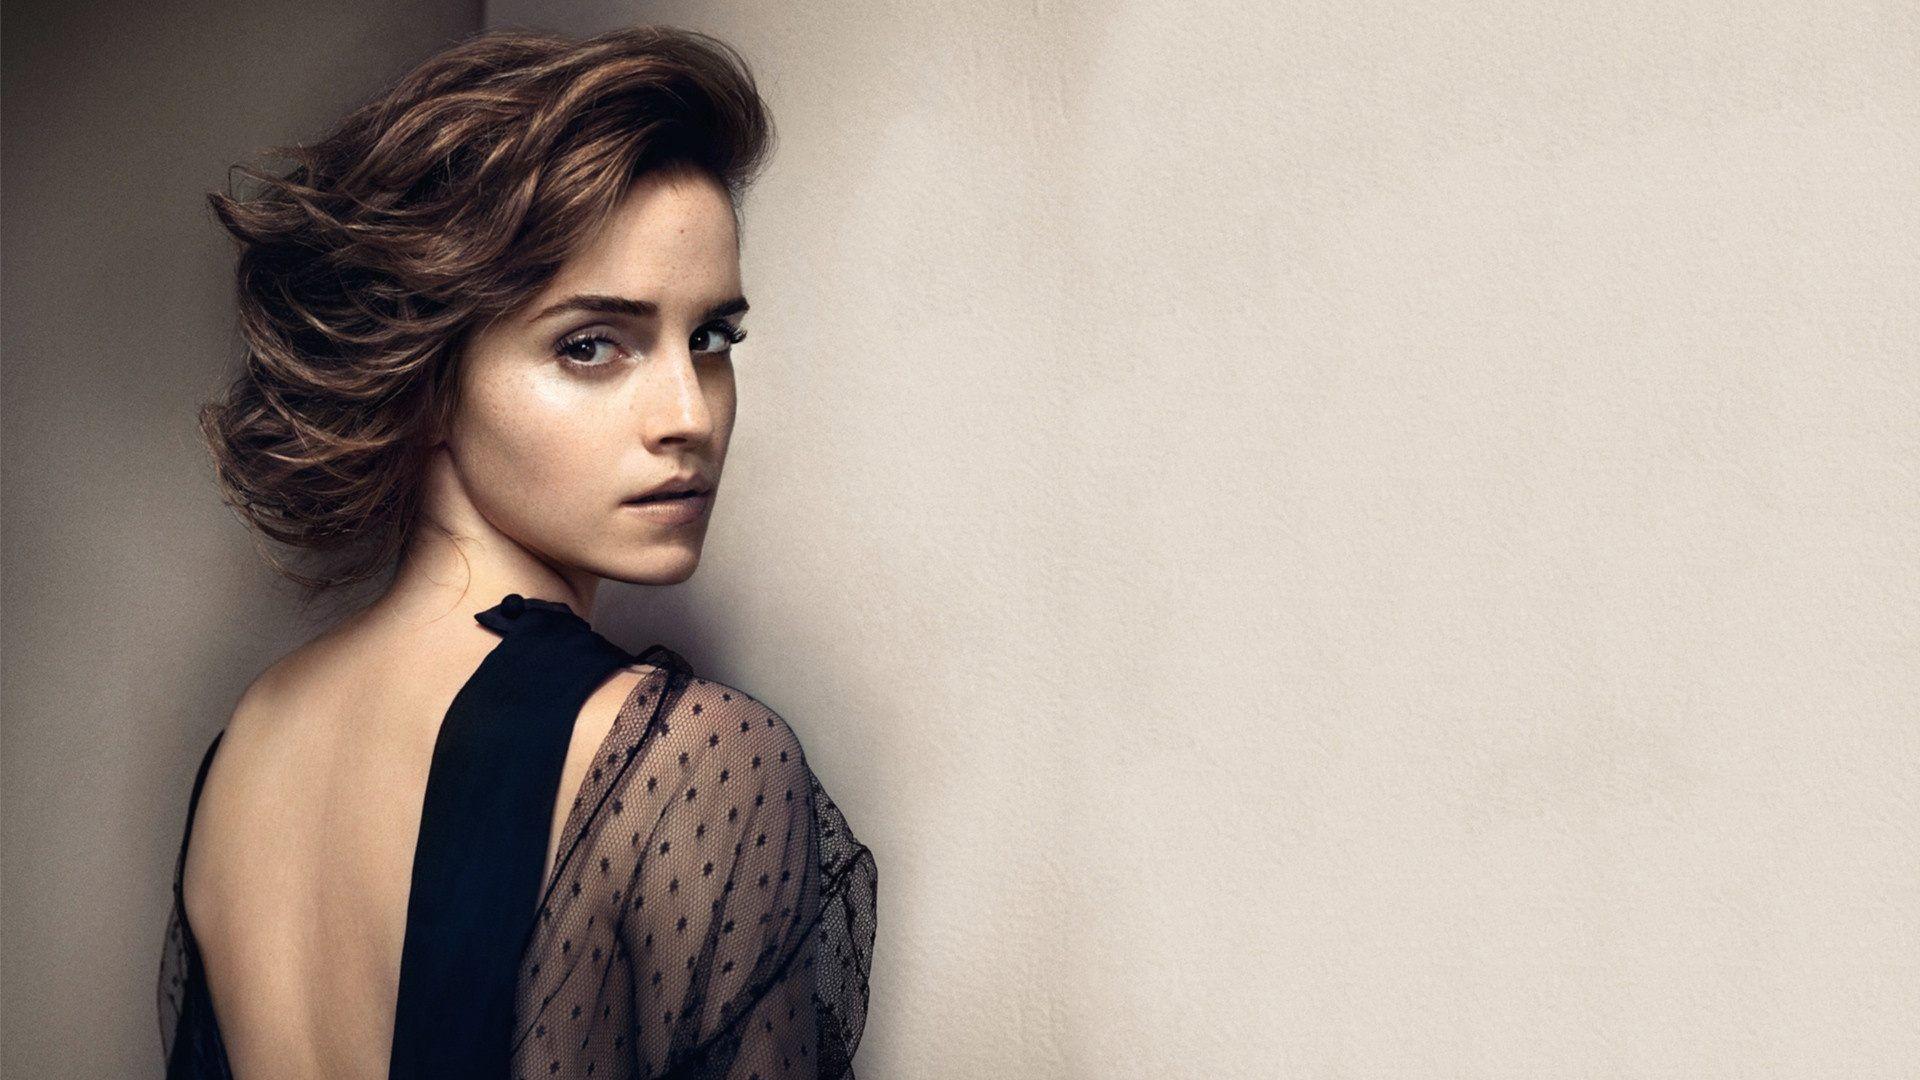 Sad Face Emma Watson Image Wallpaper